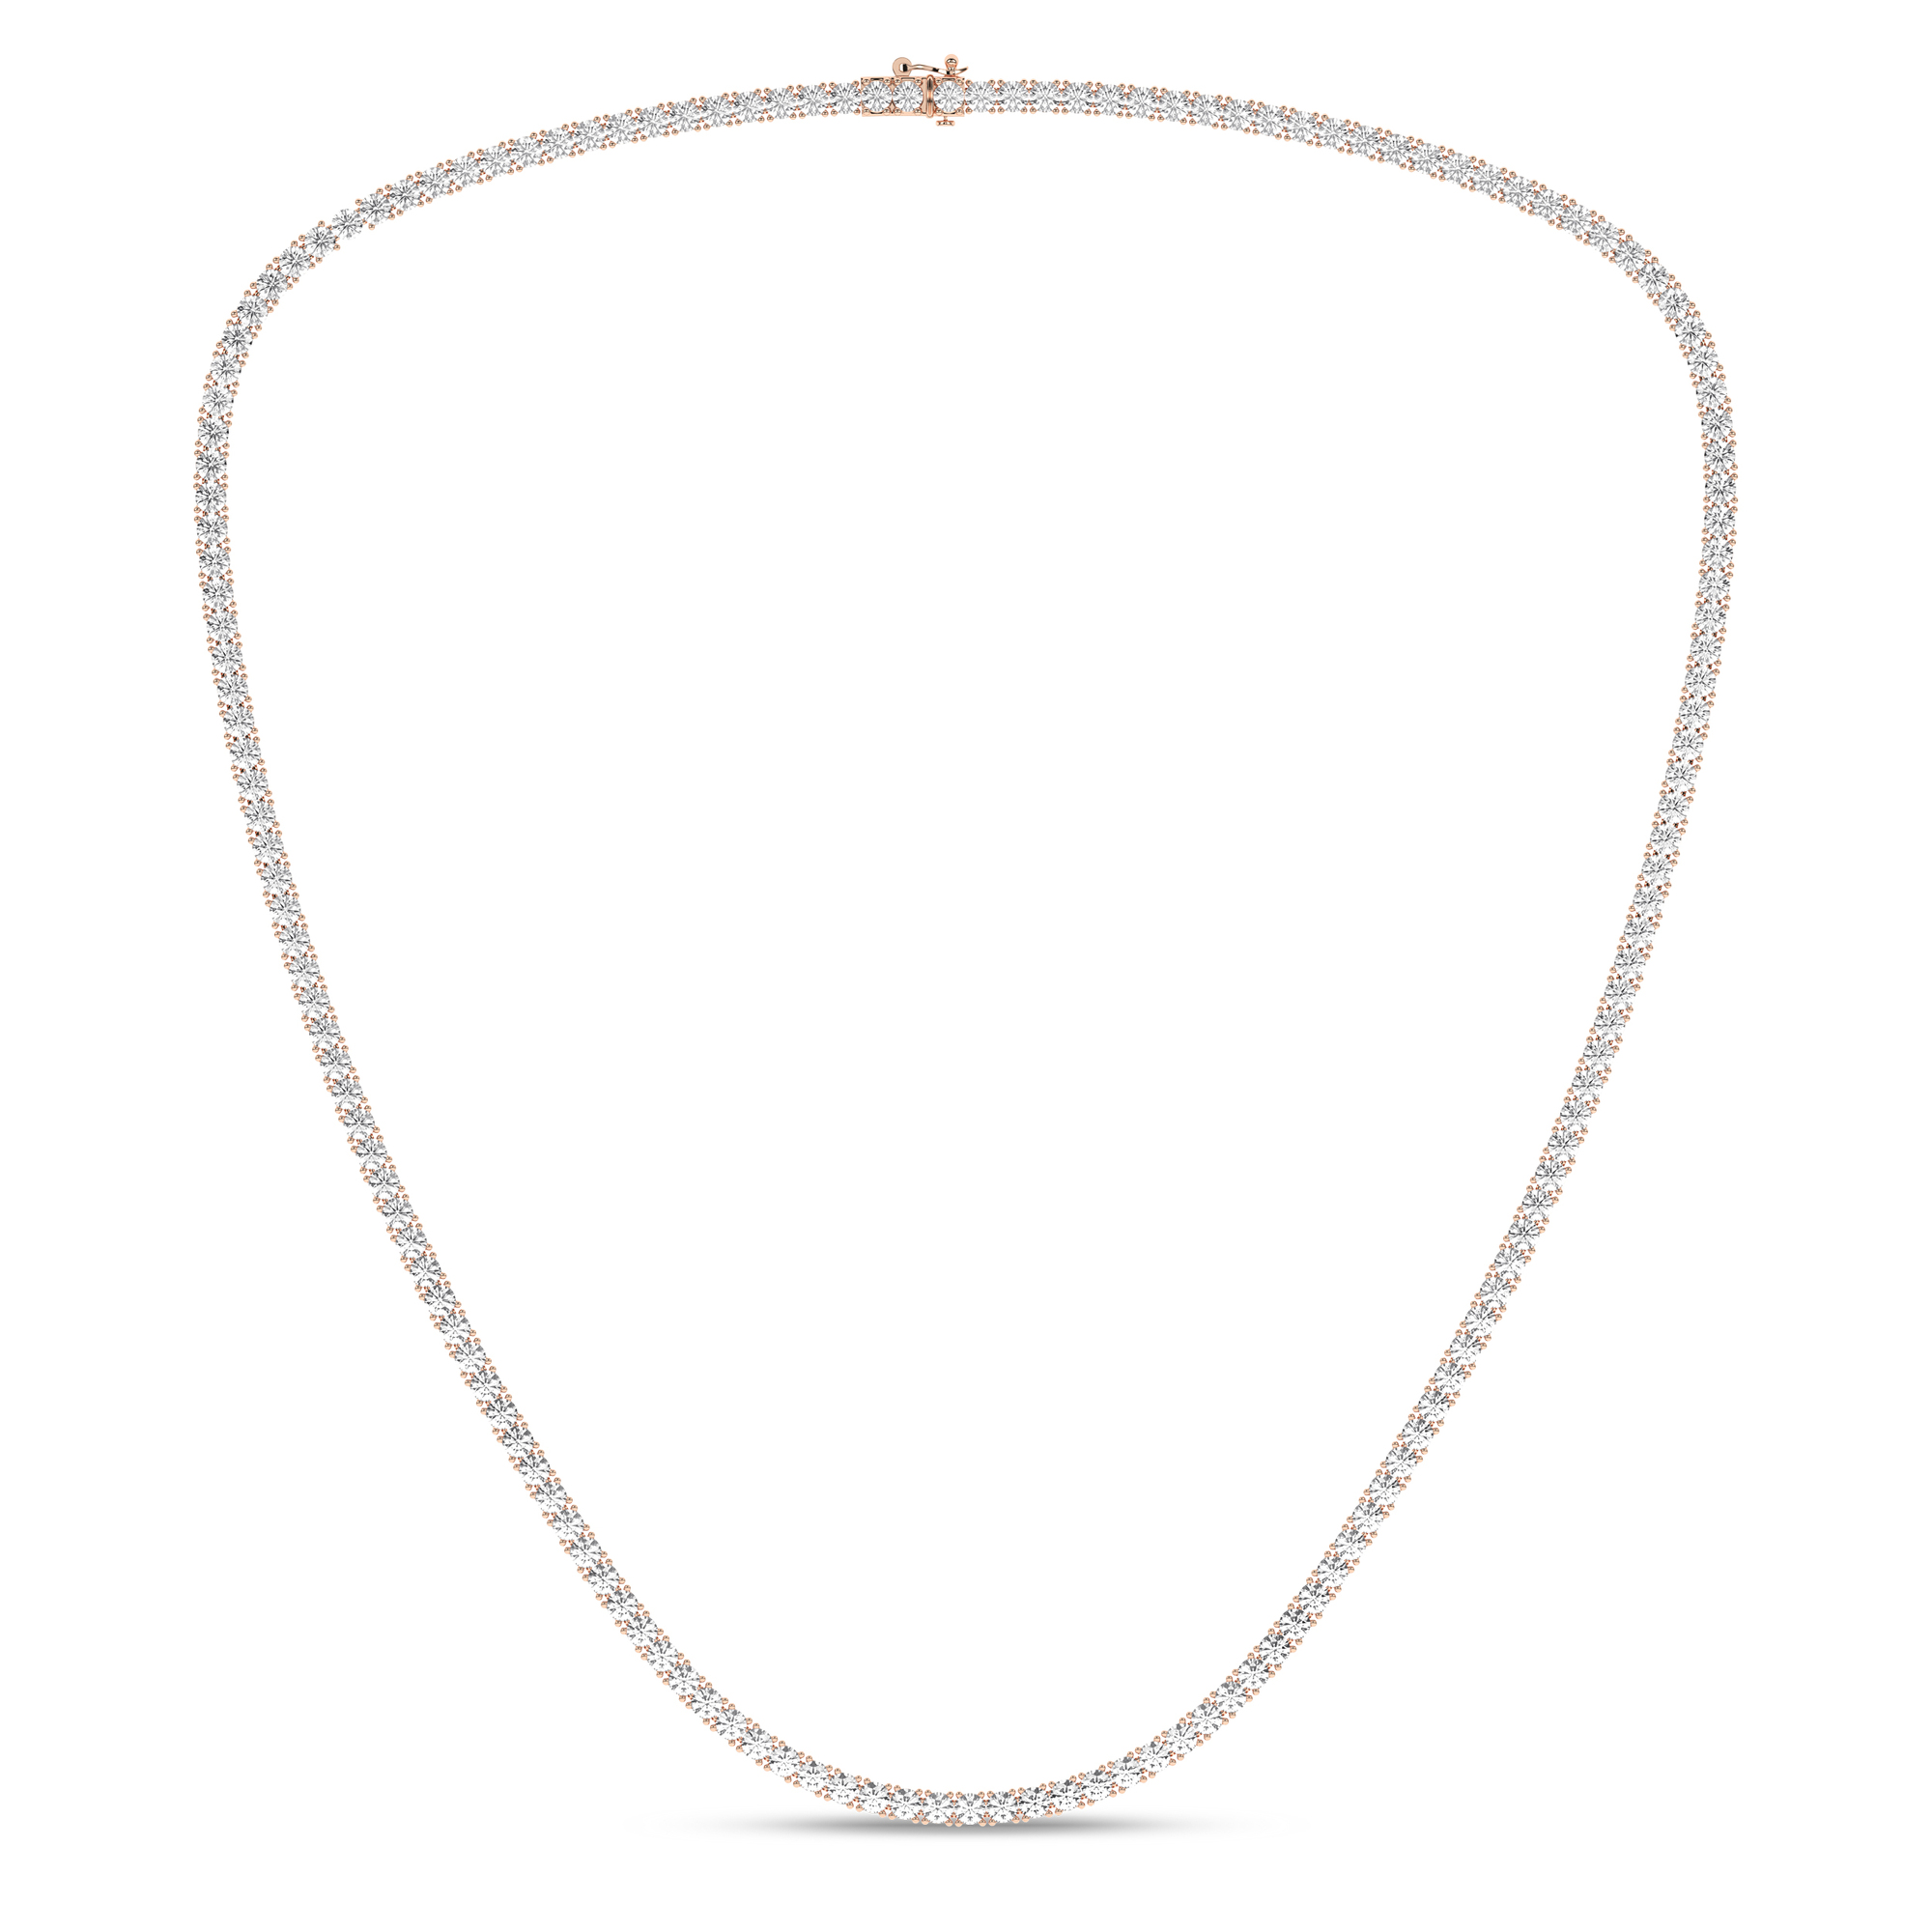 15ct. Diamond Rivera Necklace